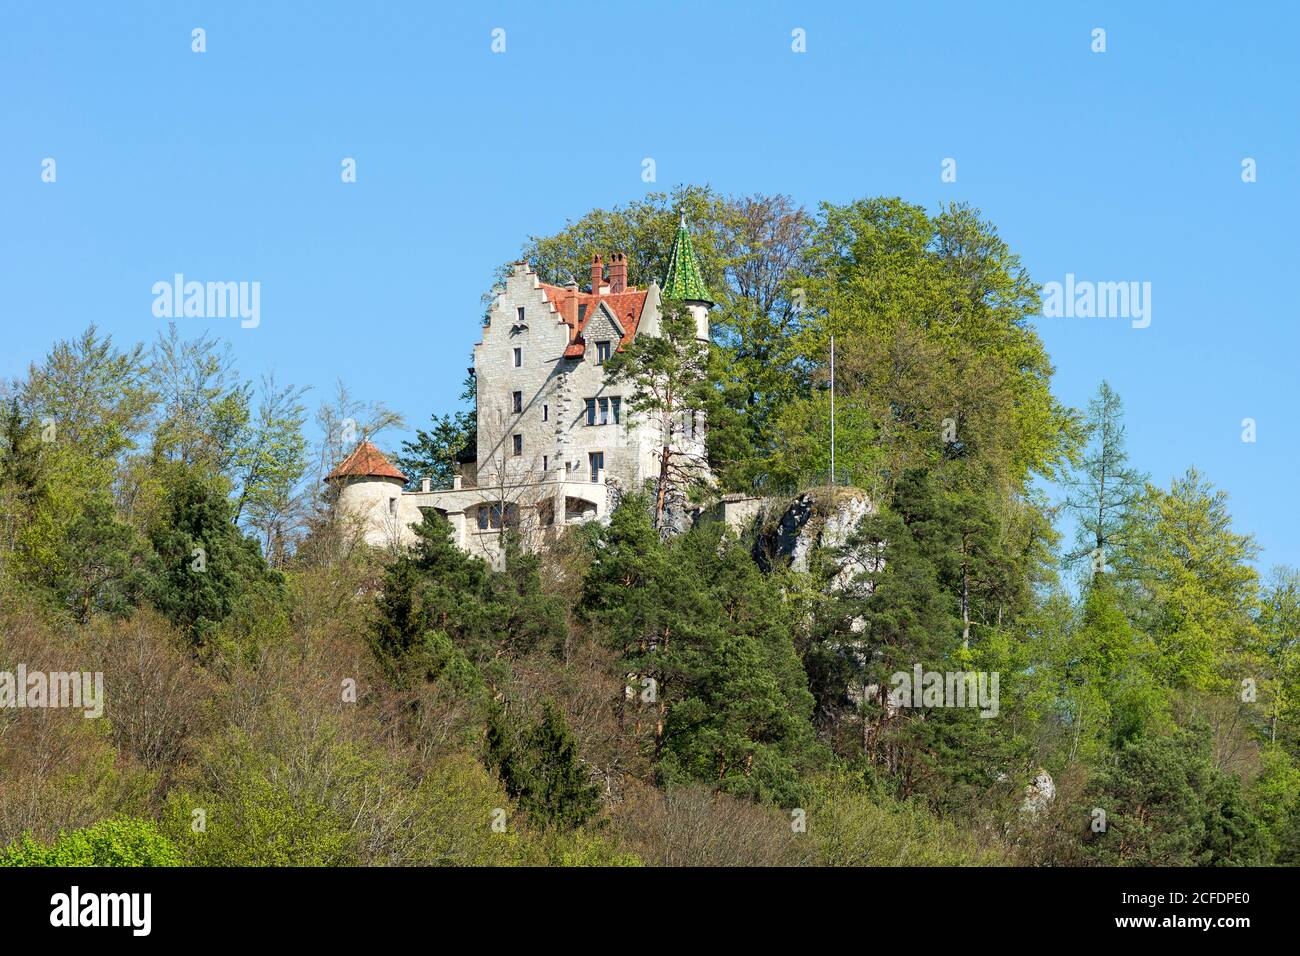 Germany, Baden-Wuerttemberg, Bad Urach - Seeburg, Uhenfels Castle in the Erm Valley on the Swabian Jura. Stock Photo